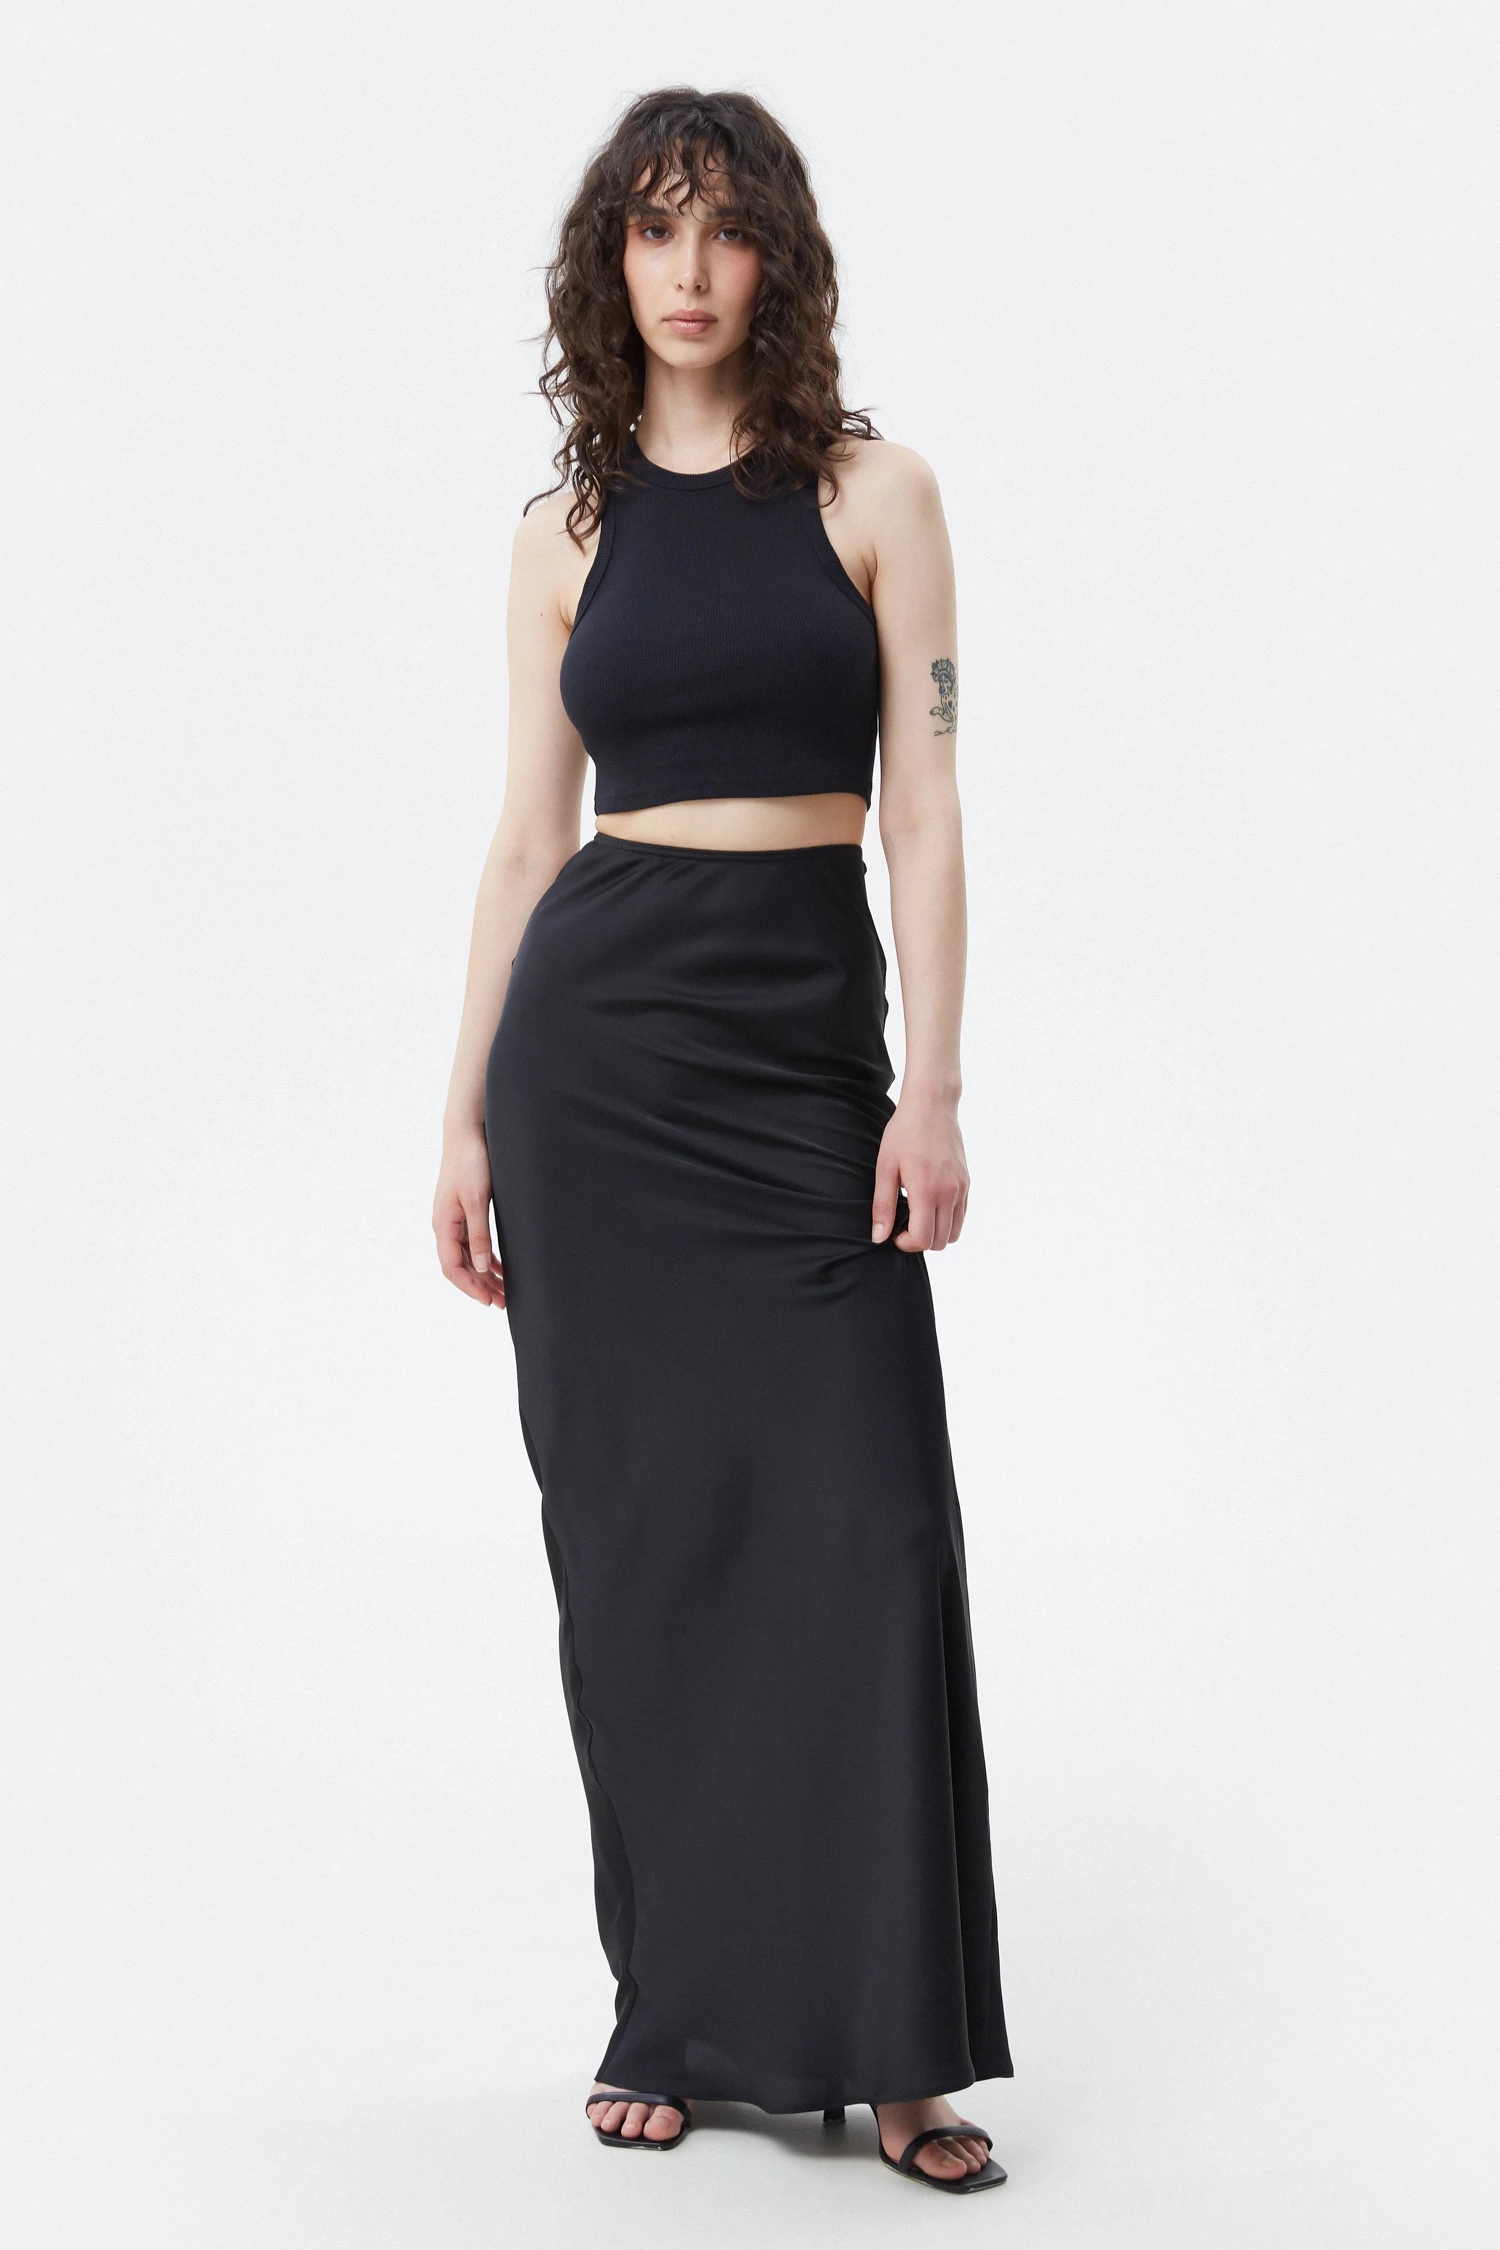 Black satin maxi skirt, photo 2